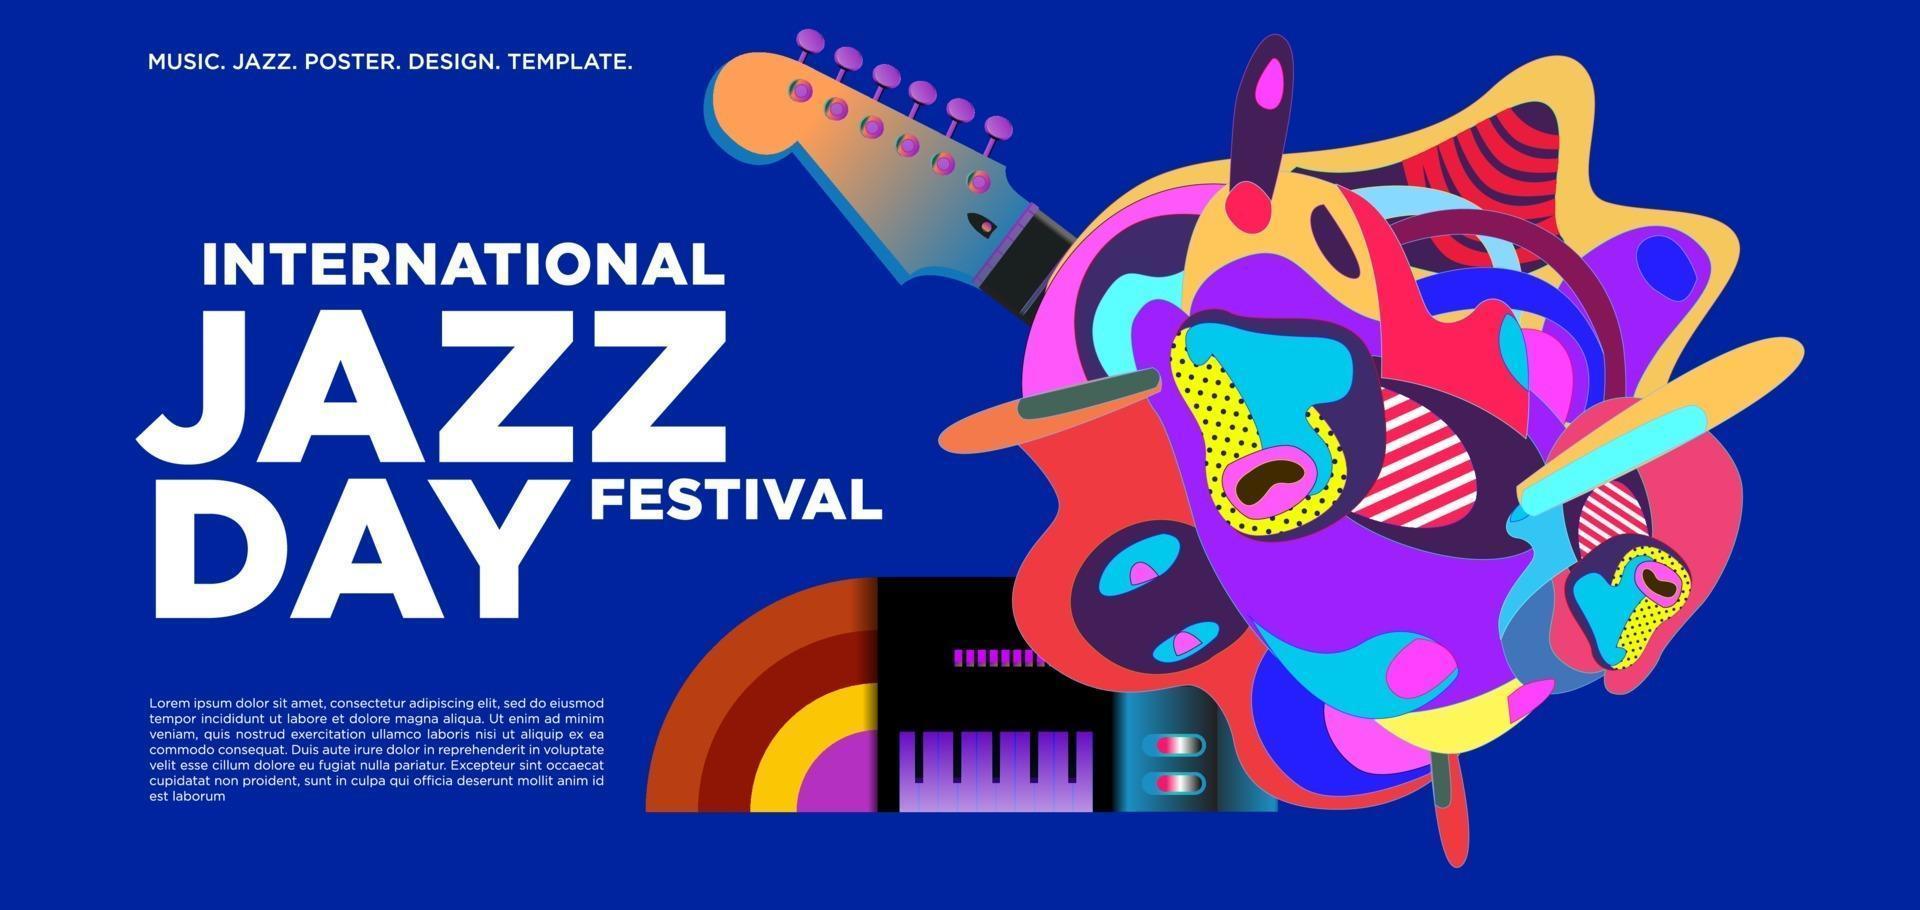 vektor färgglada internationella jazz dag banner design